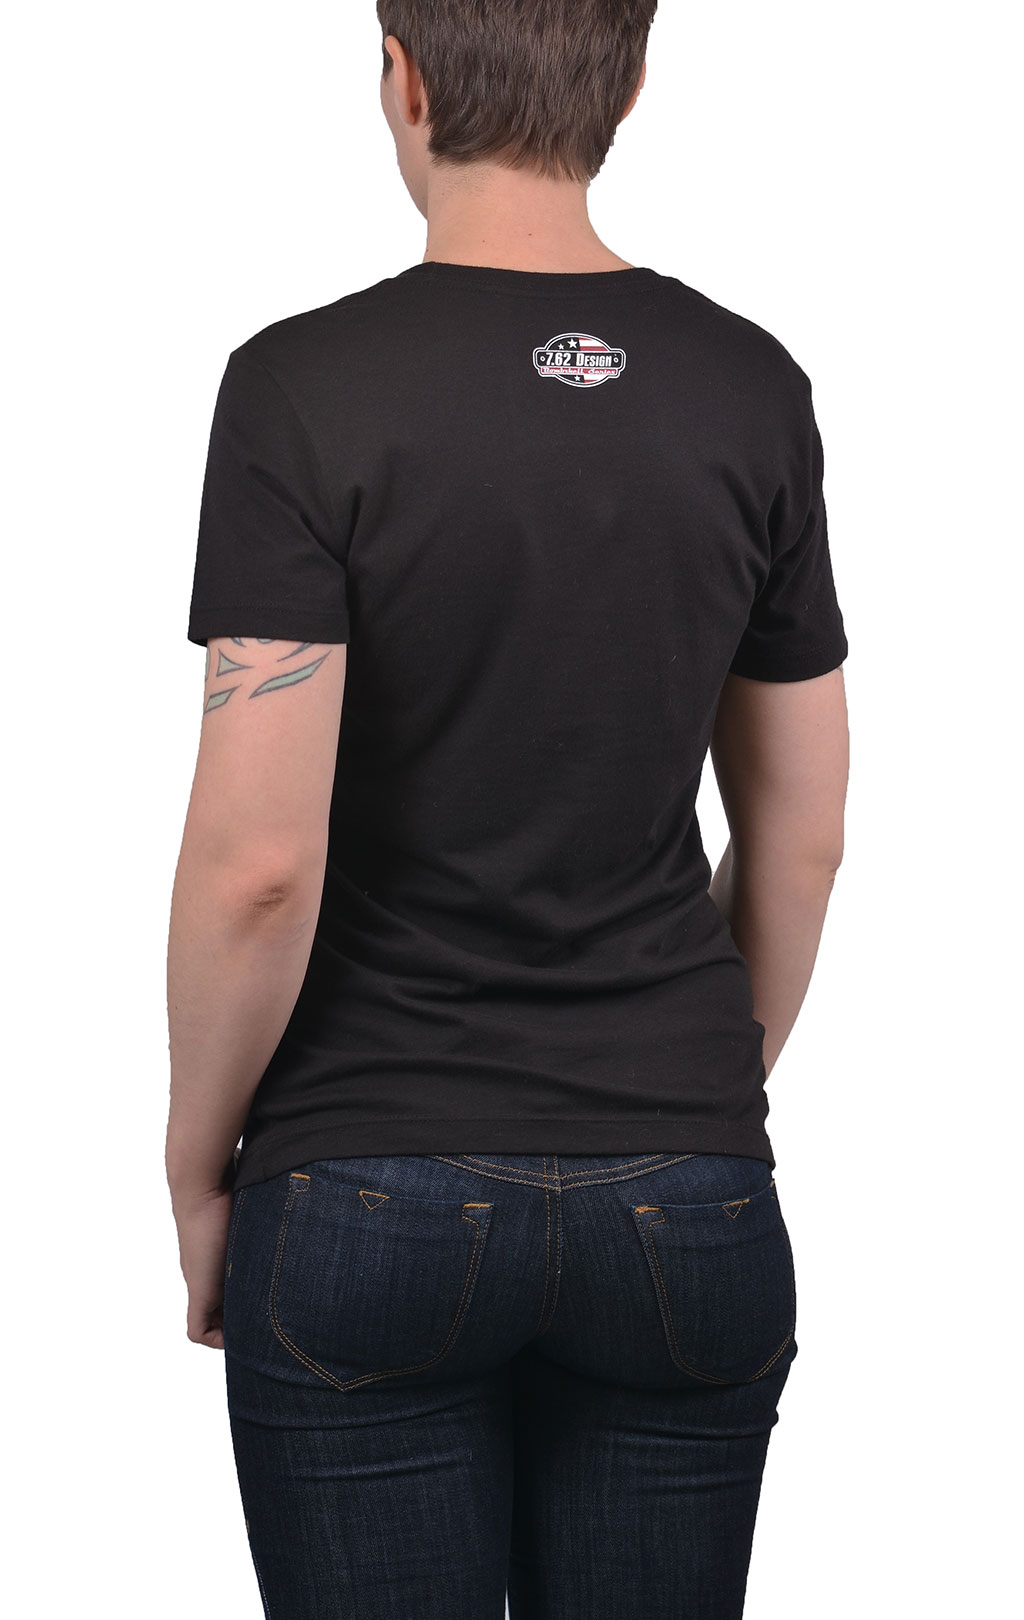 Женская футболка 7.62 D DAY DIVA black (005-380) 